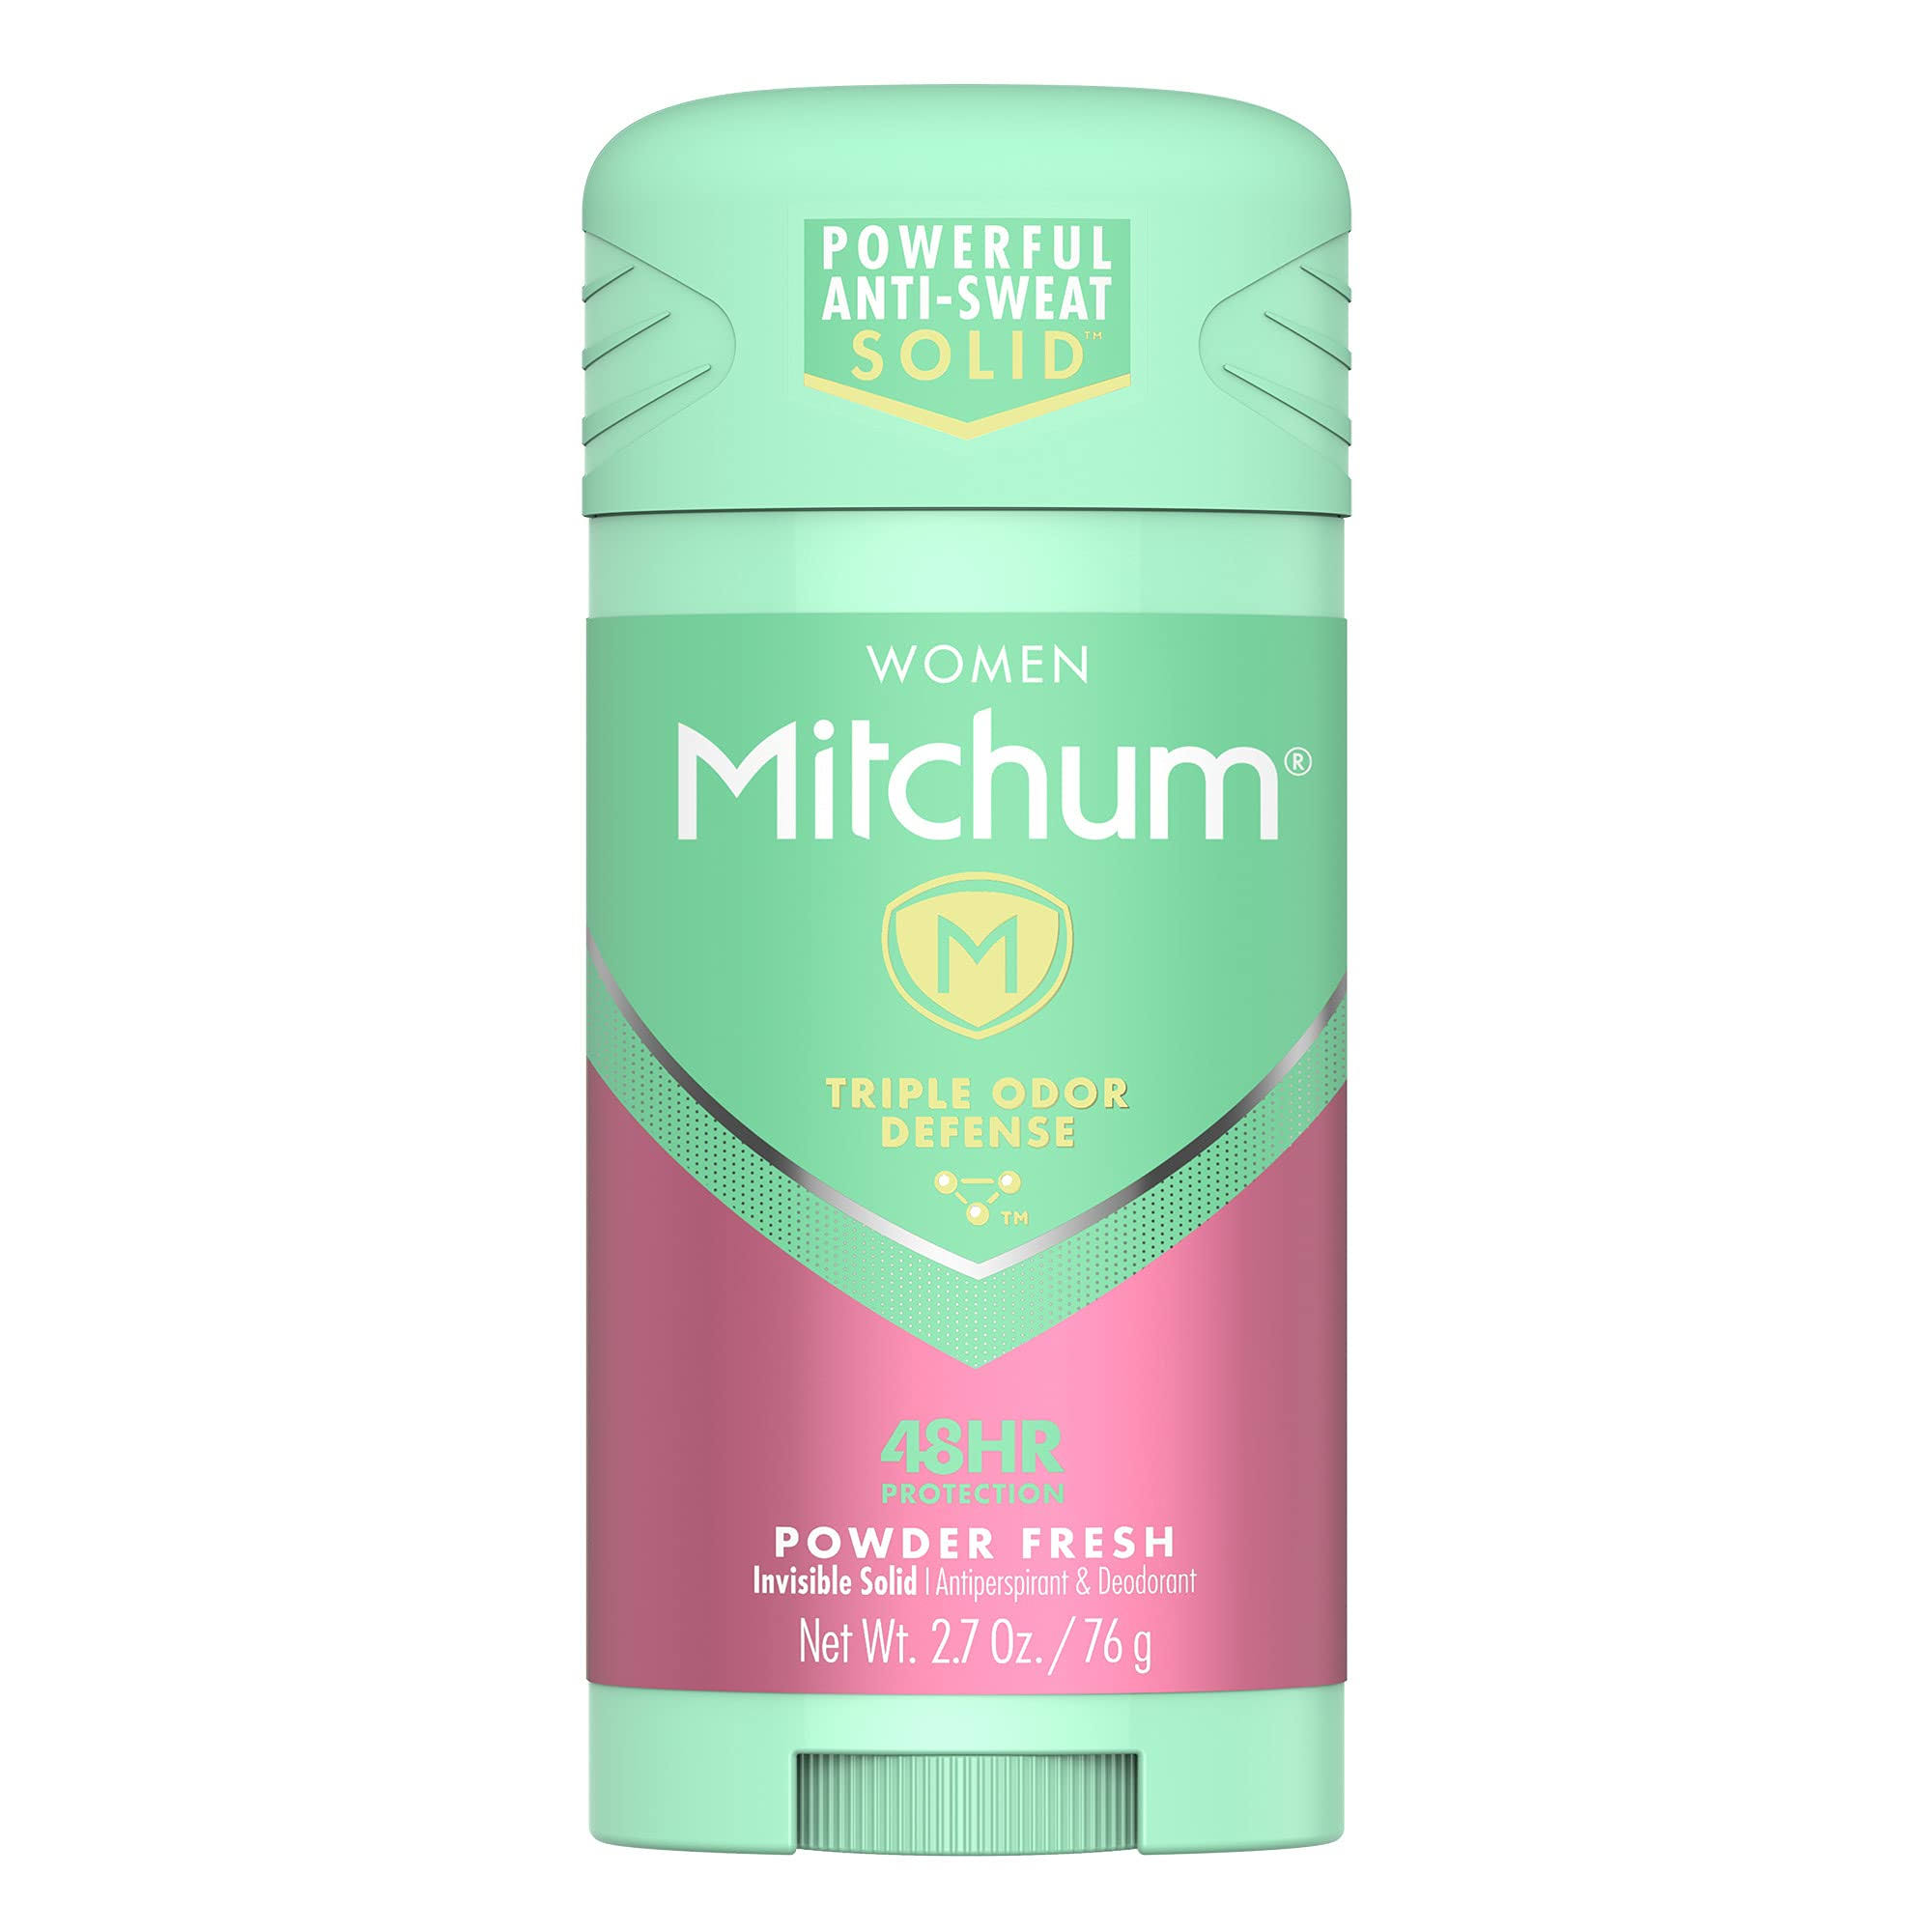 Mitchum Women's Advance Control Anti Perspirant - Powder Fresh, 2.7oz